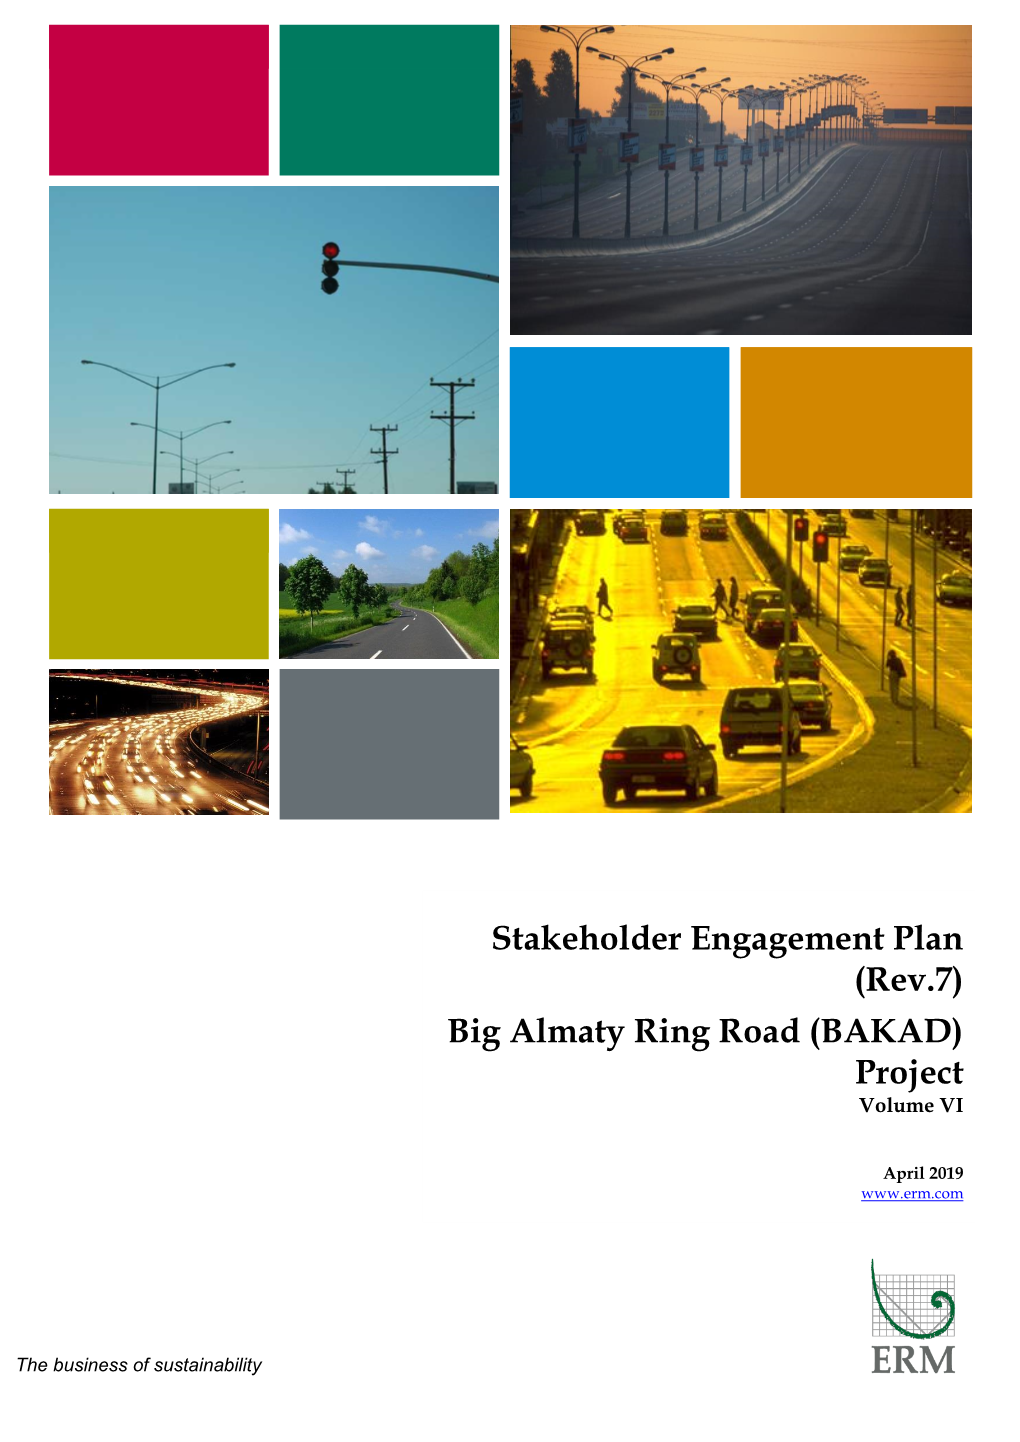 Stakeholder Engagement Plan (Rev.7) Big Almaty Ring Road (BAKAD) Project Volume VI